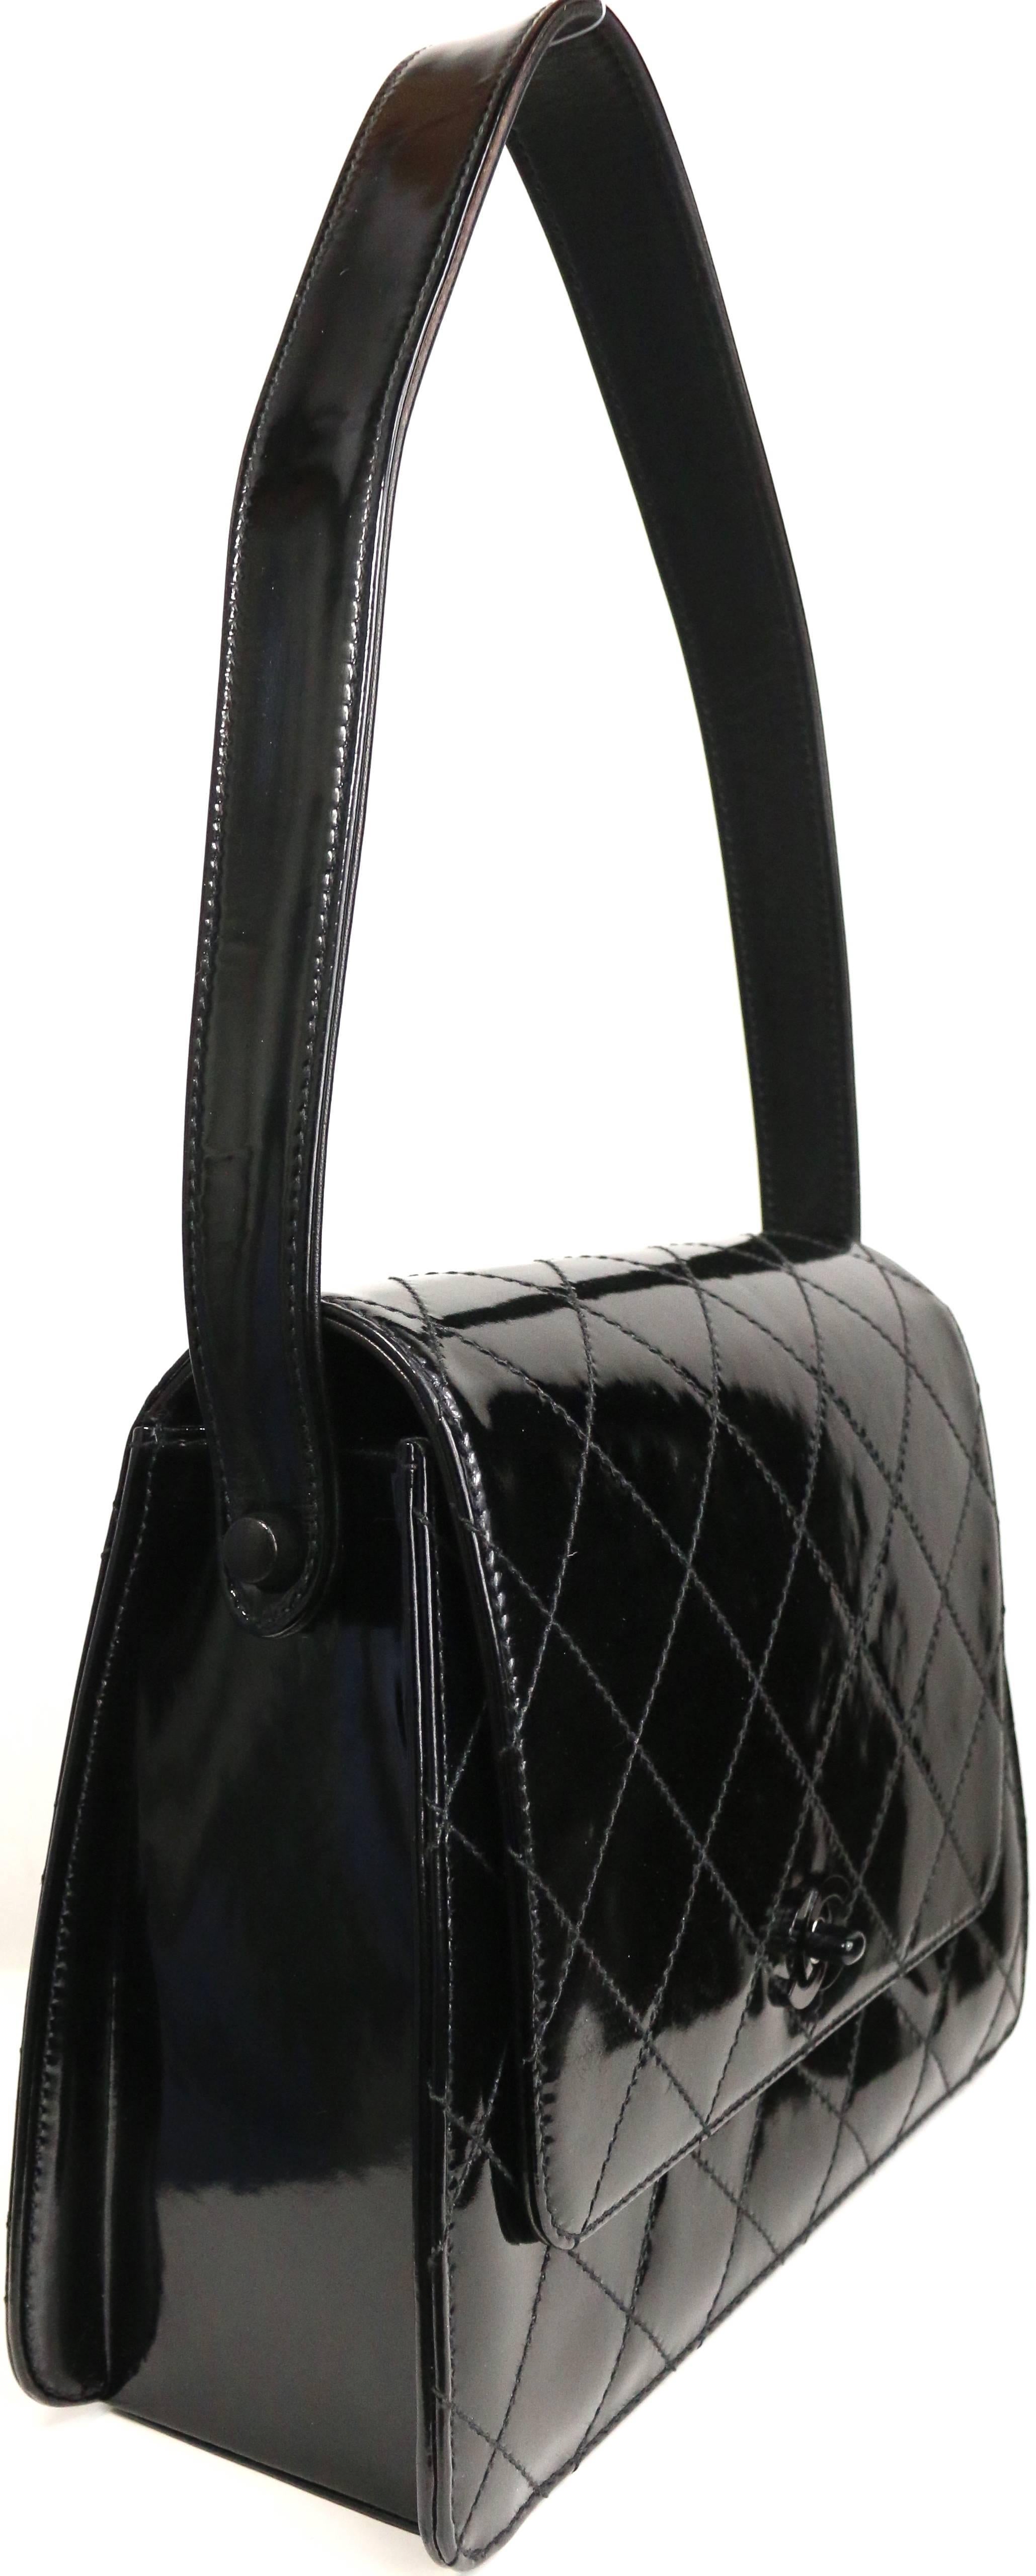 - Vintage 90s Chanel black quilted patent leather handbag. 

- Black 